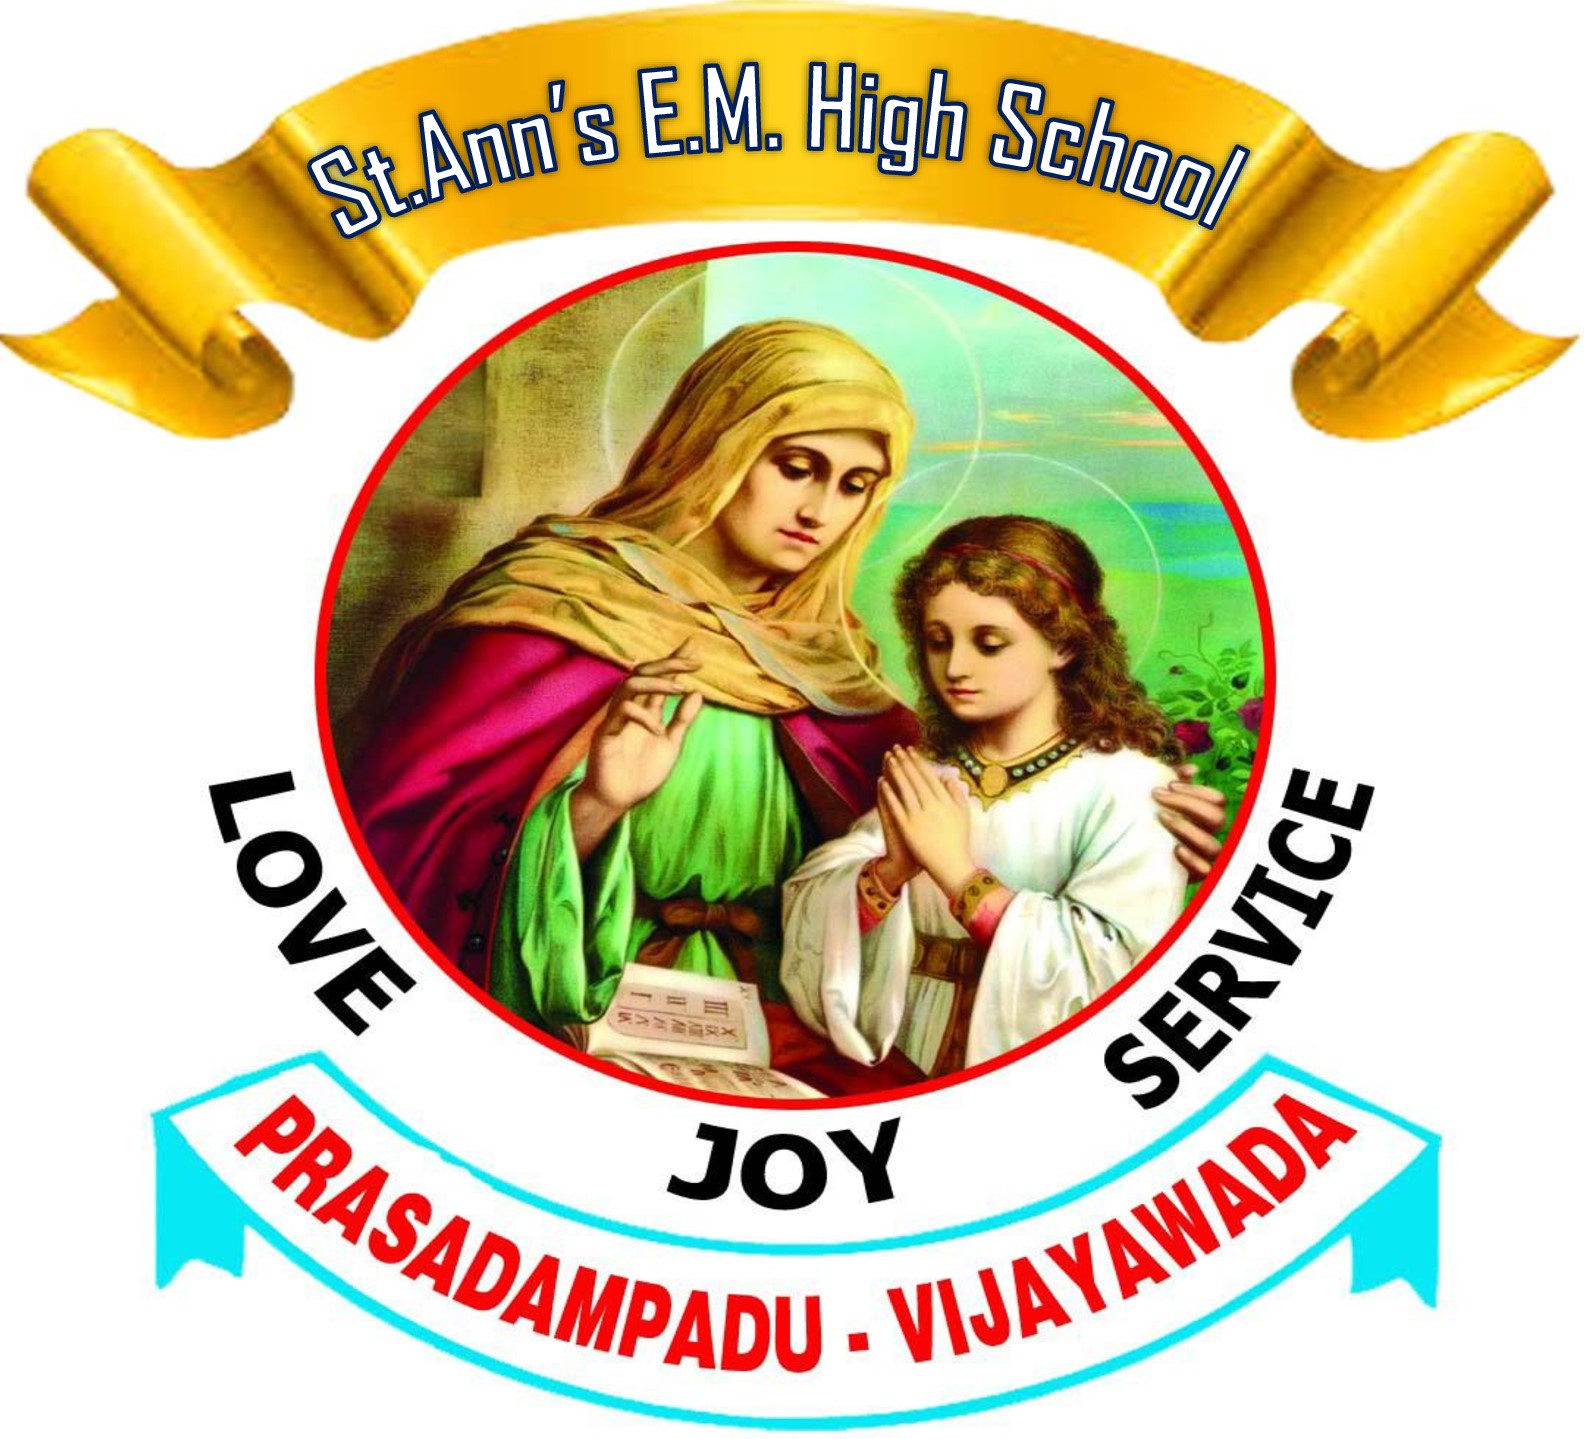 St Ann's CBSE School,Prasadampadu